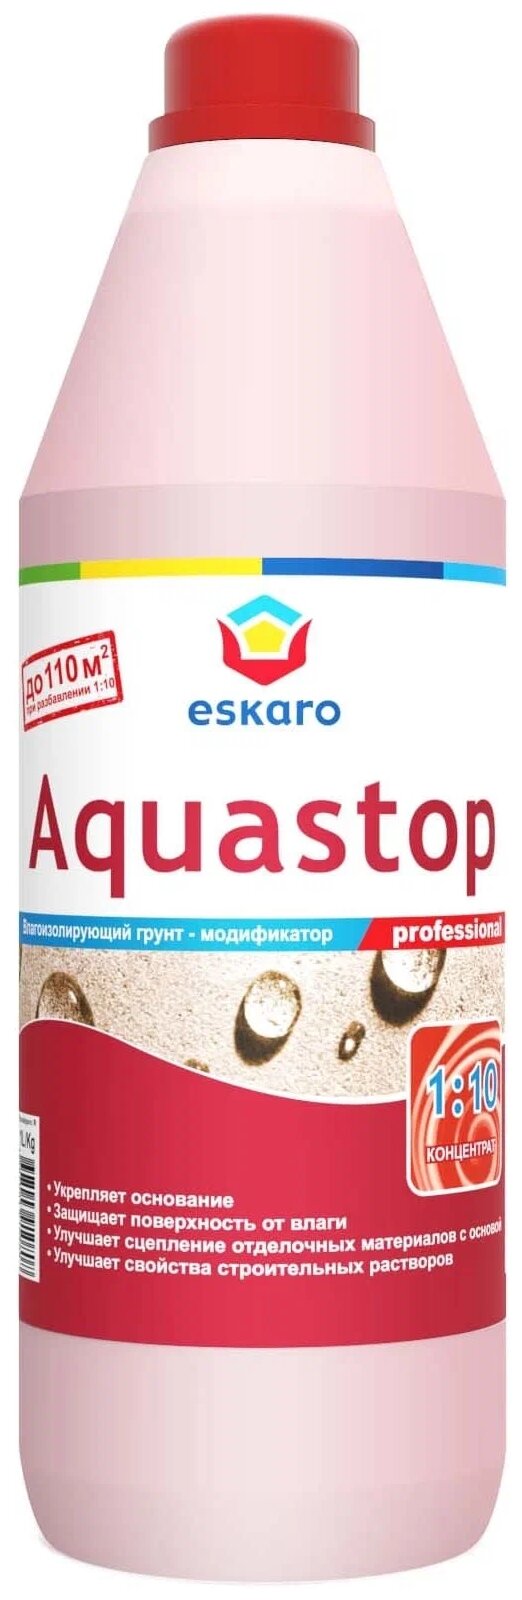  Eskaro Aquastop Professional  1 